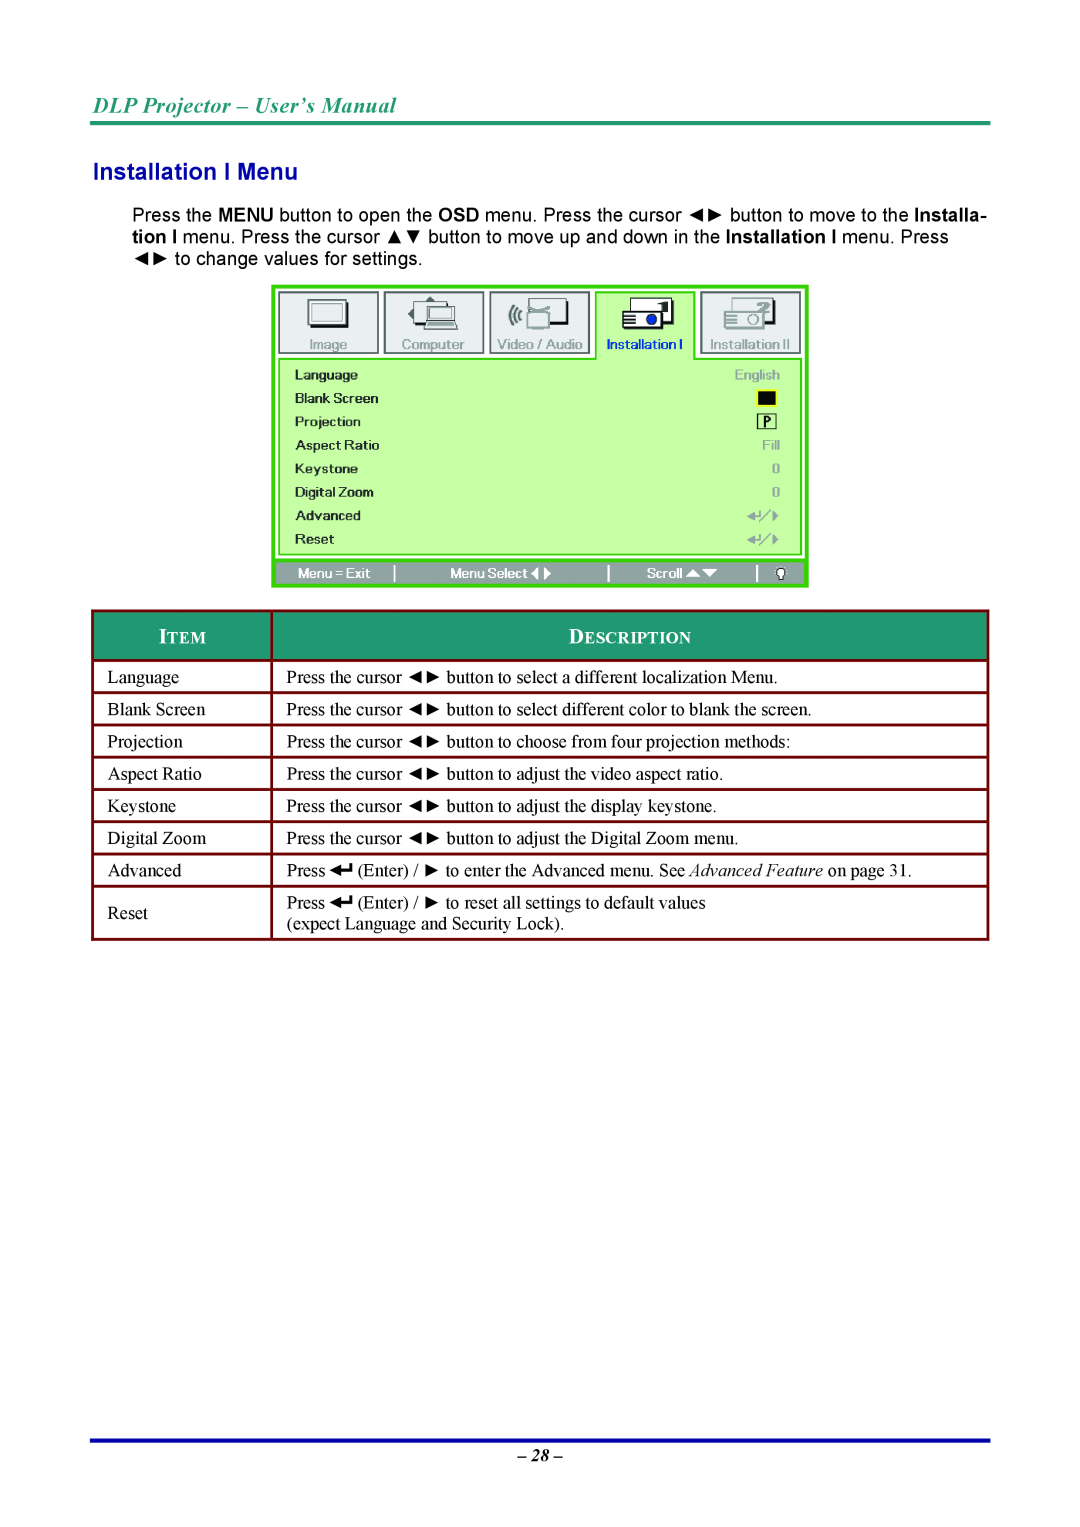 Vivitek D7 user manual Installation I Menu, DLP Projector - User’s Manual, Description 